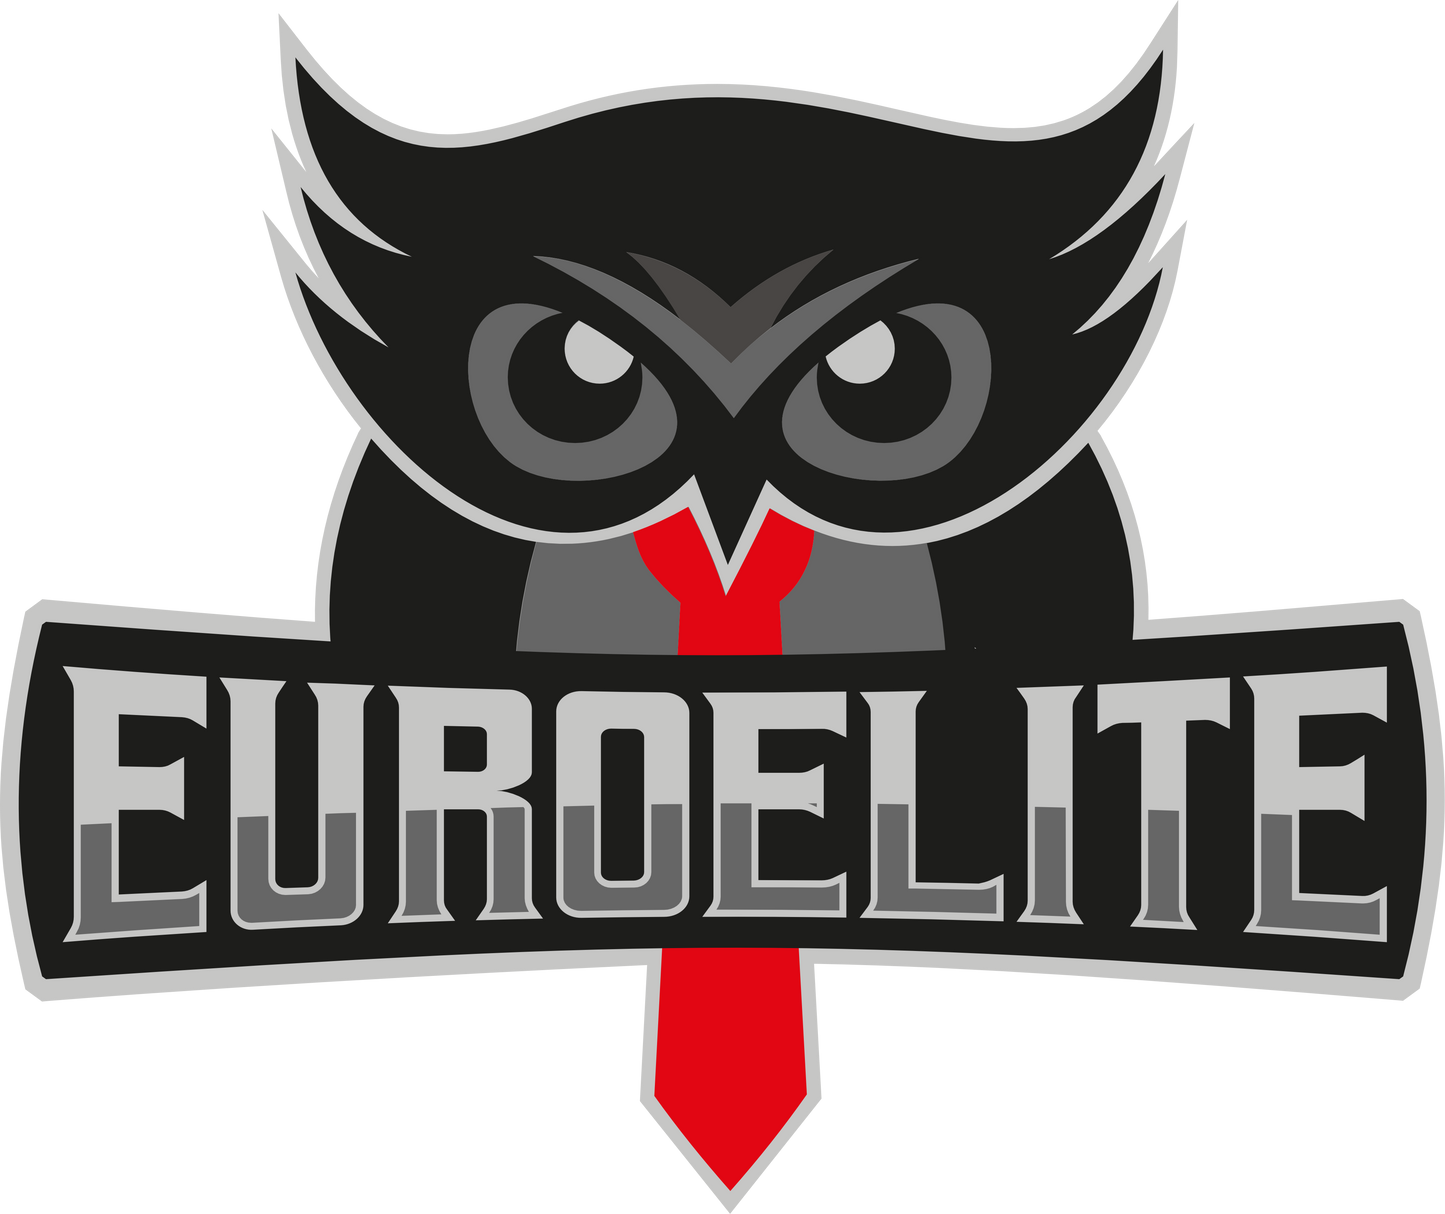 EuroElite Sticker